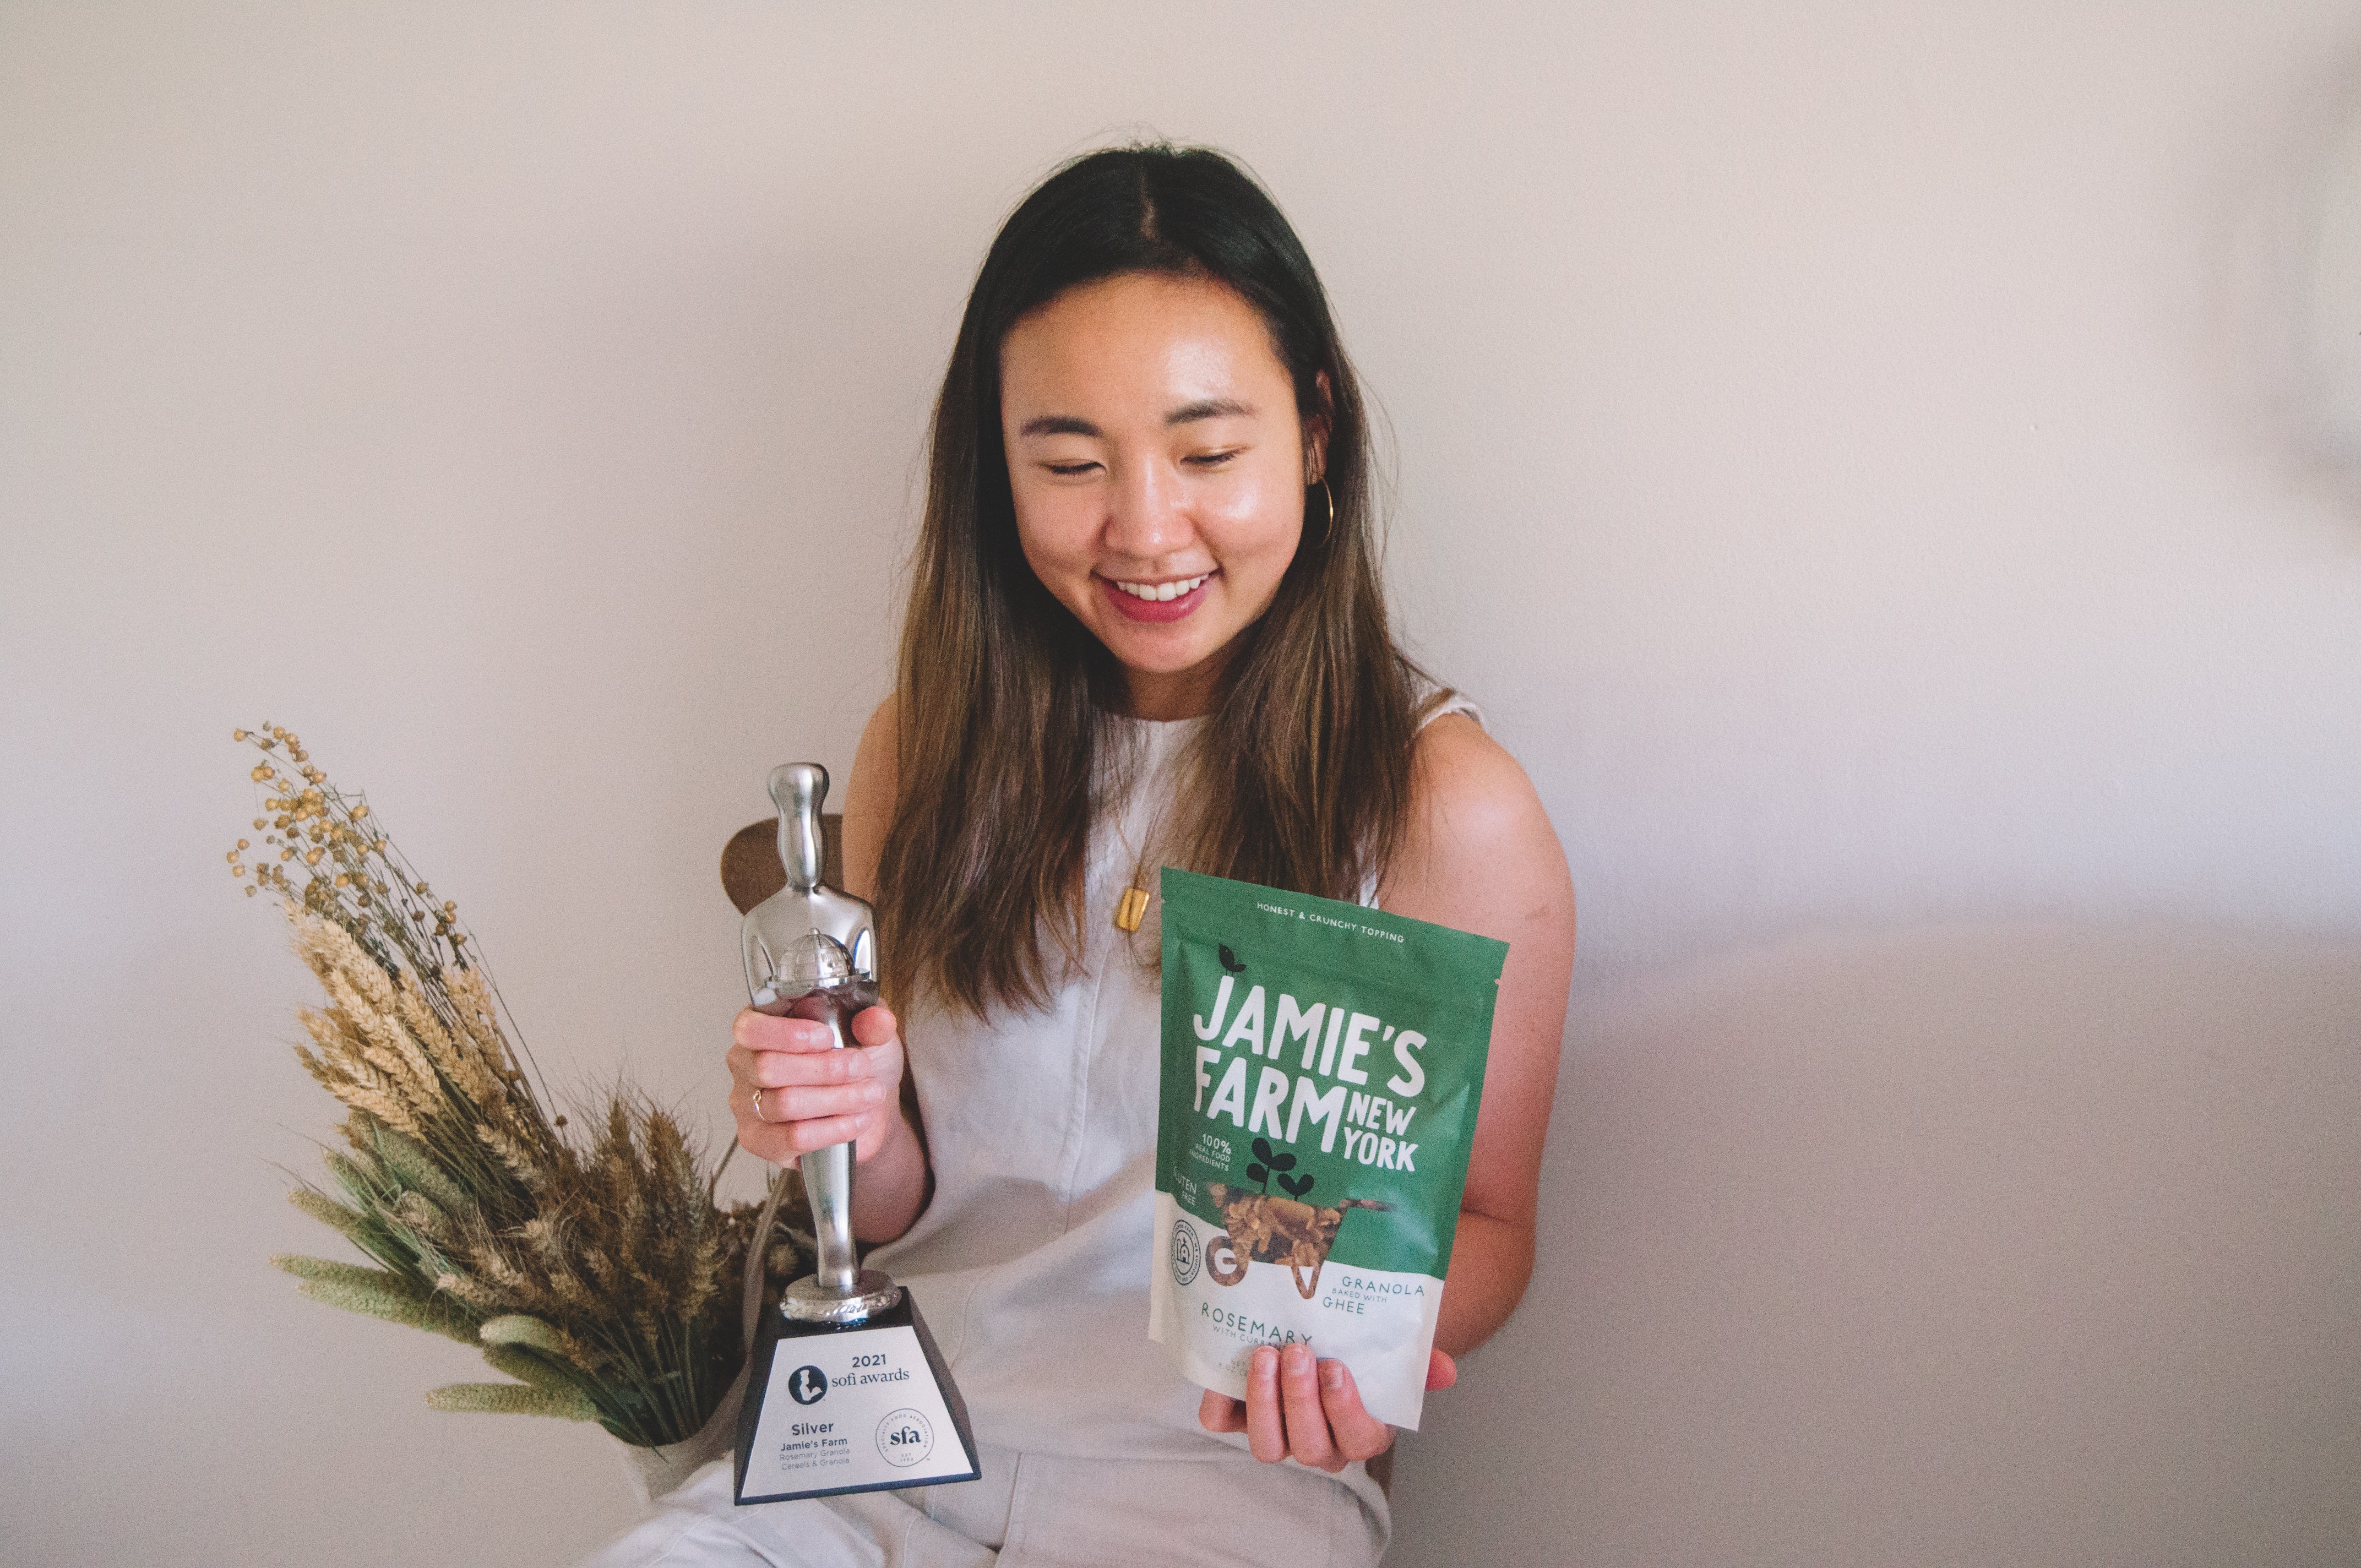 Jamie's Farm Best Granola NYC - Award-Winning, Gluten-Free, Organic, Local, Seasonal | Rosemary Currant sofi Awards from the Specialty Food Association